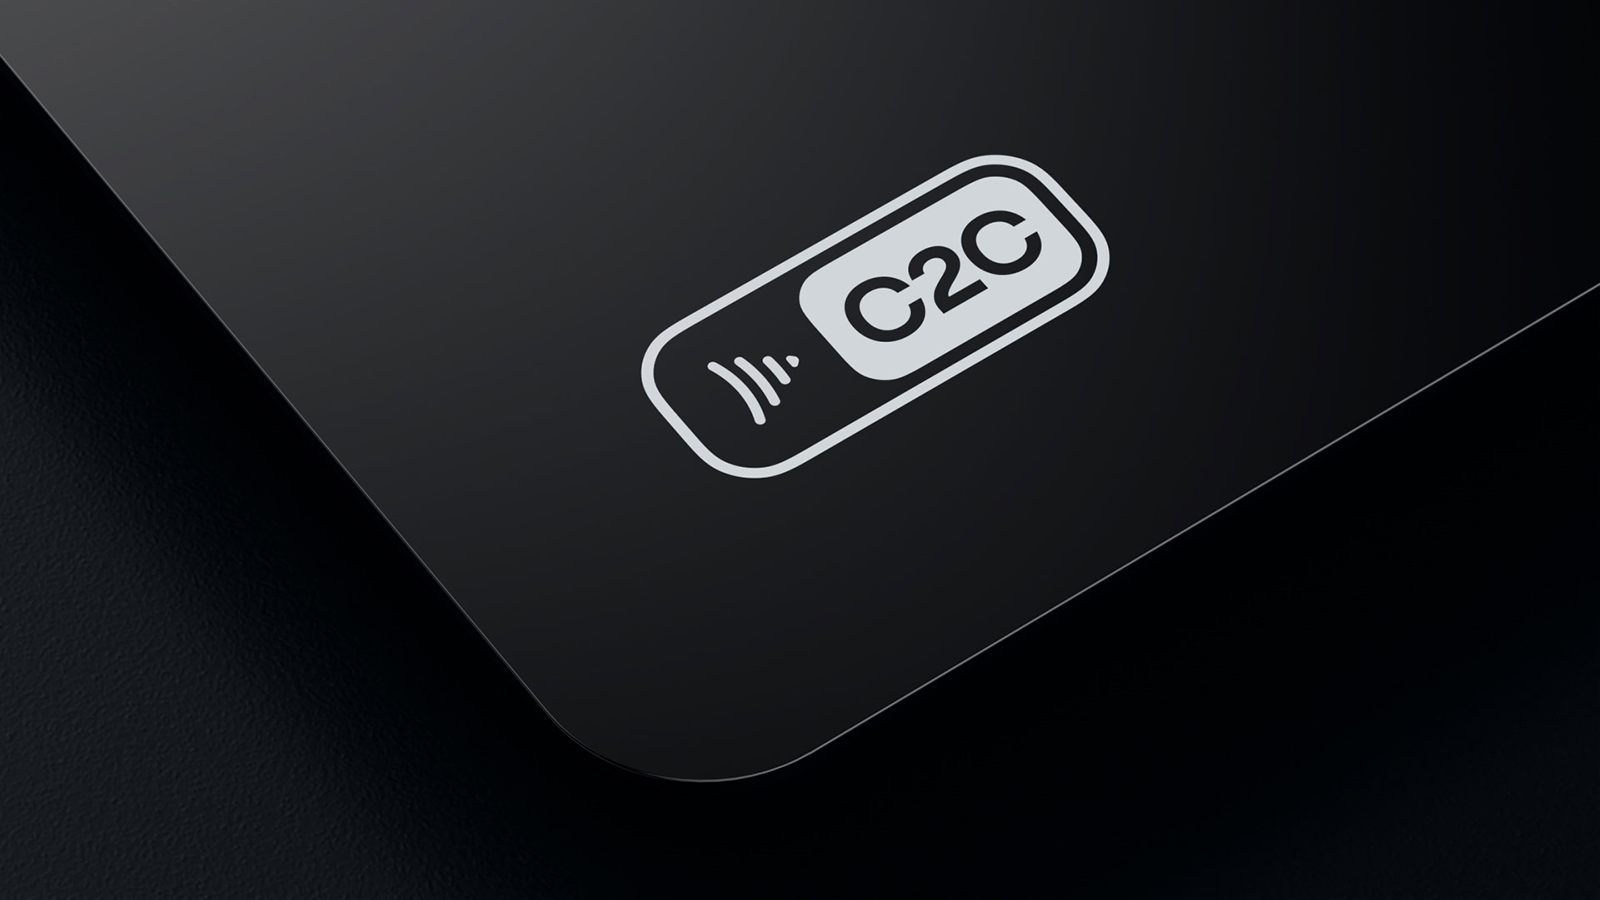 Frame.io C2C certified logo